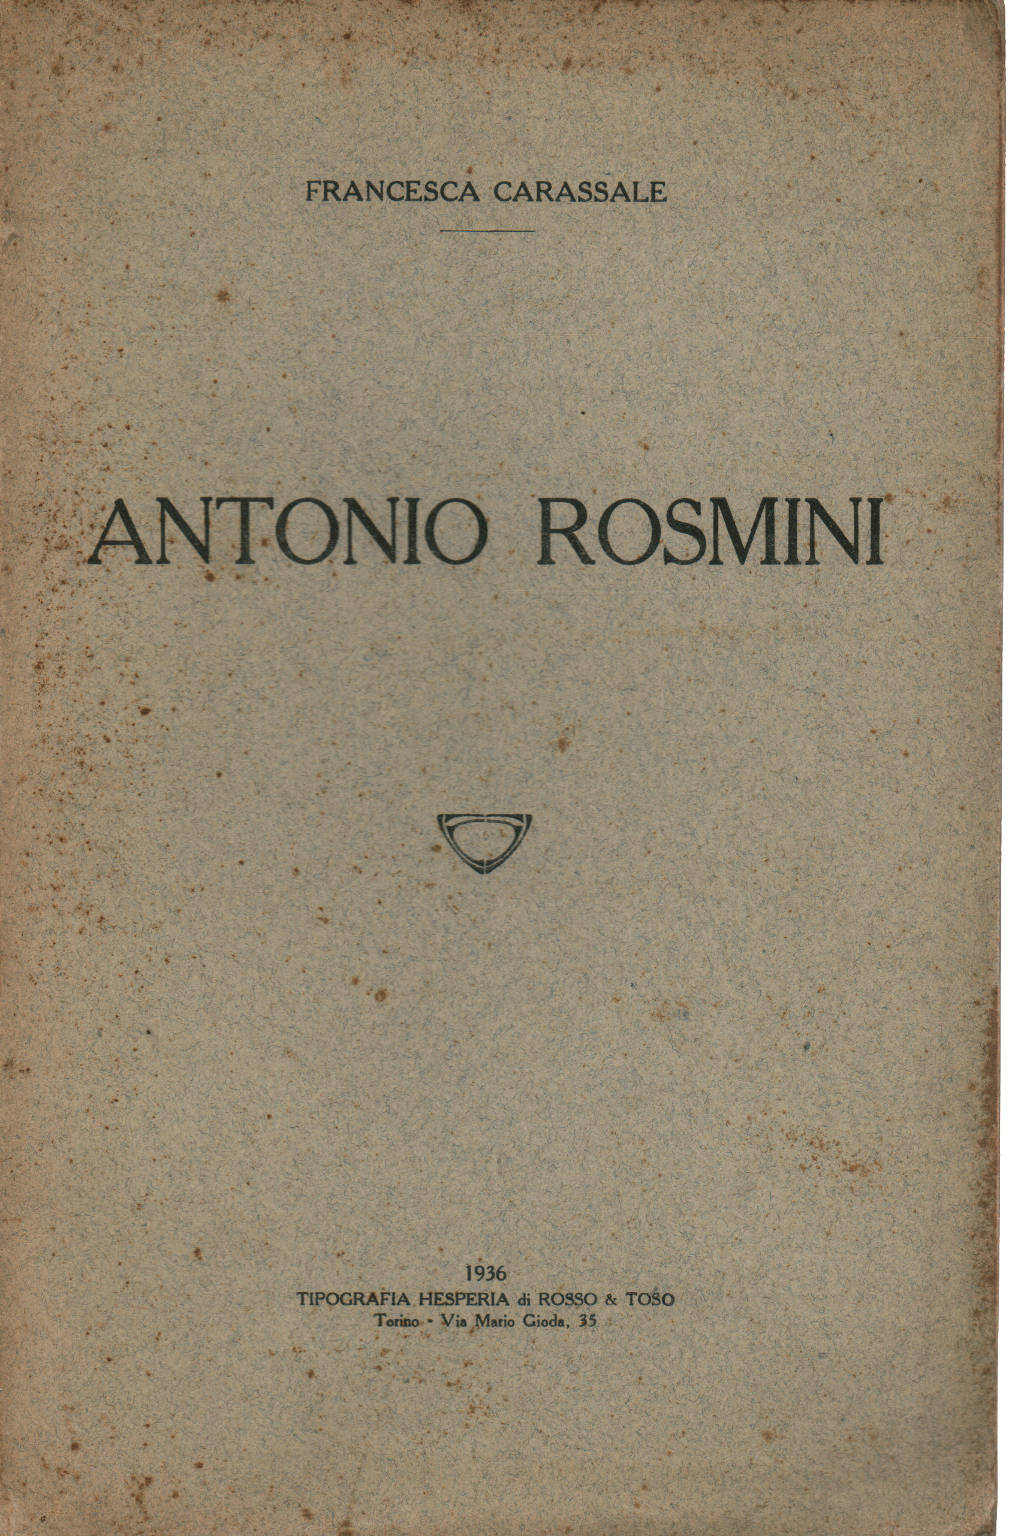 Antonio Rosmini, Francesca Carassale